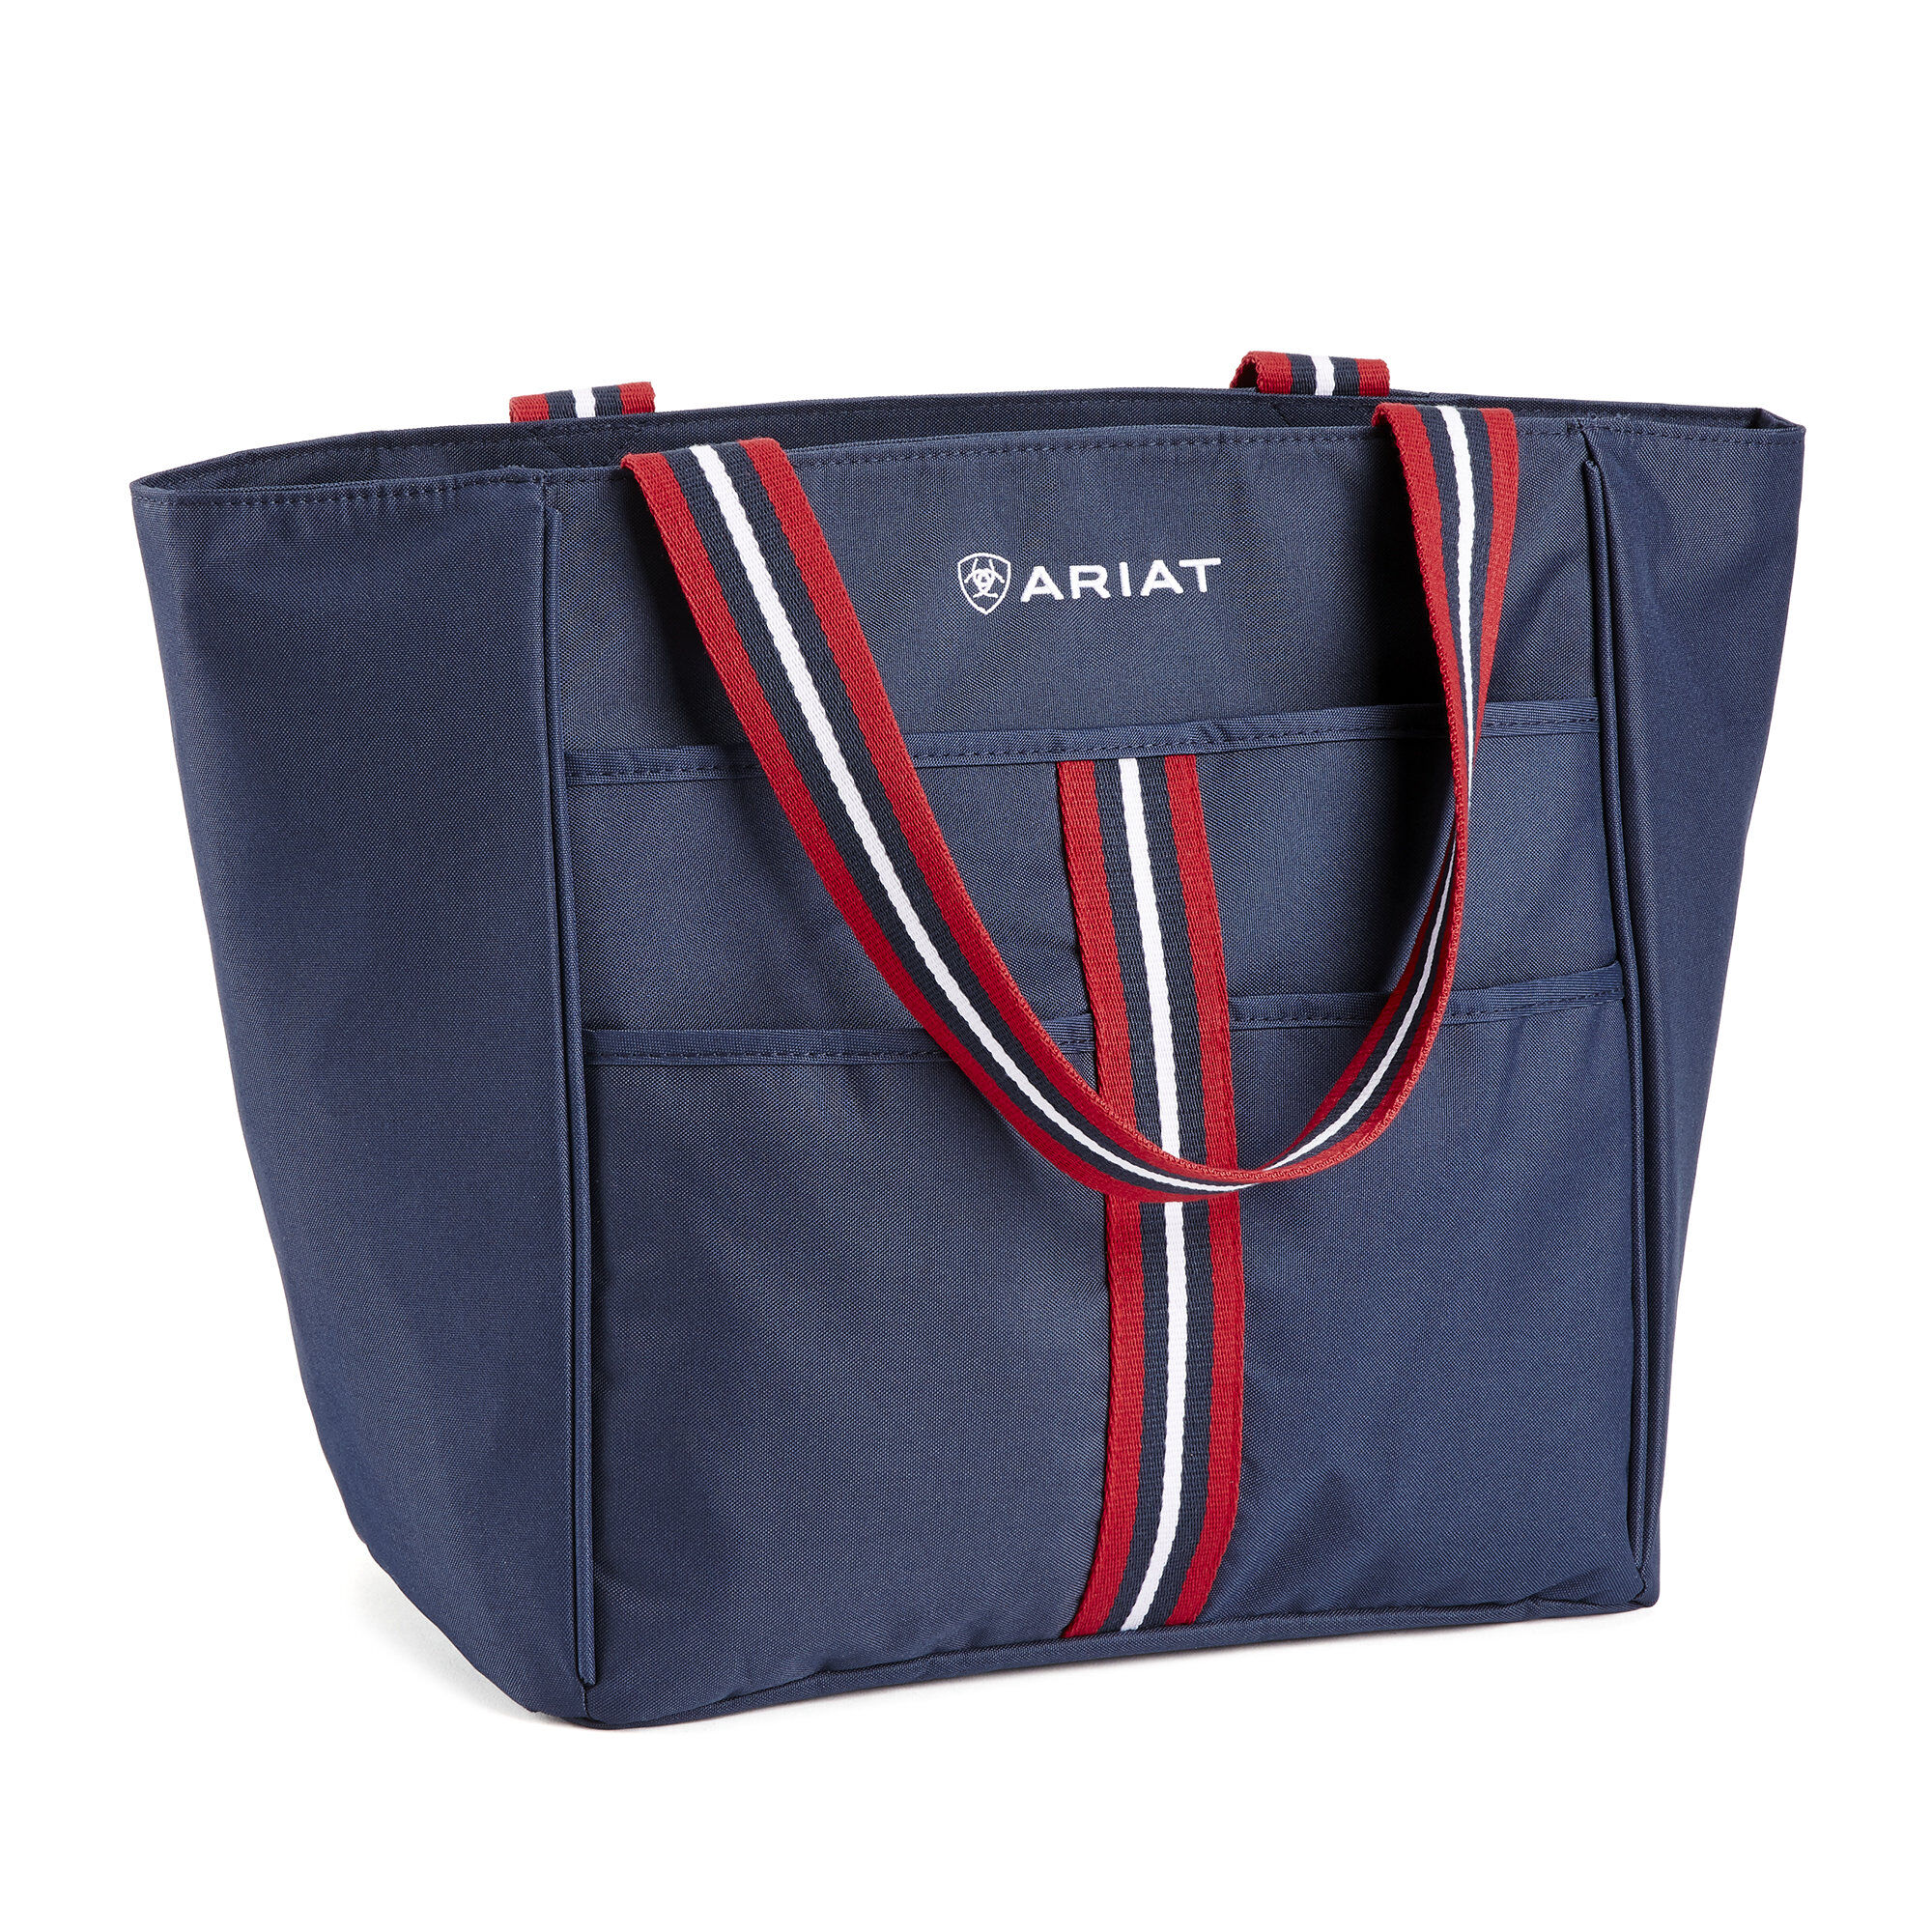 Ariat Team Carryall Tote Shopper Handtasche Putztasche  UVP 59,95€ 